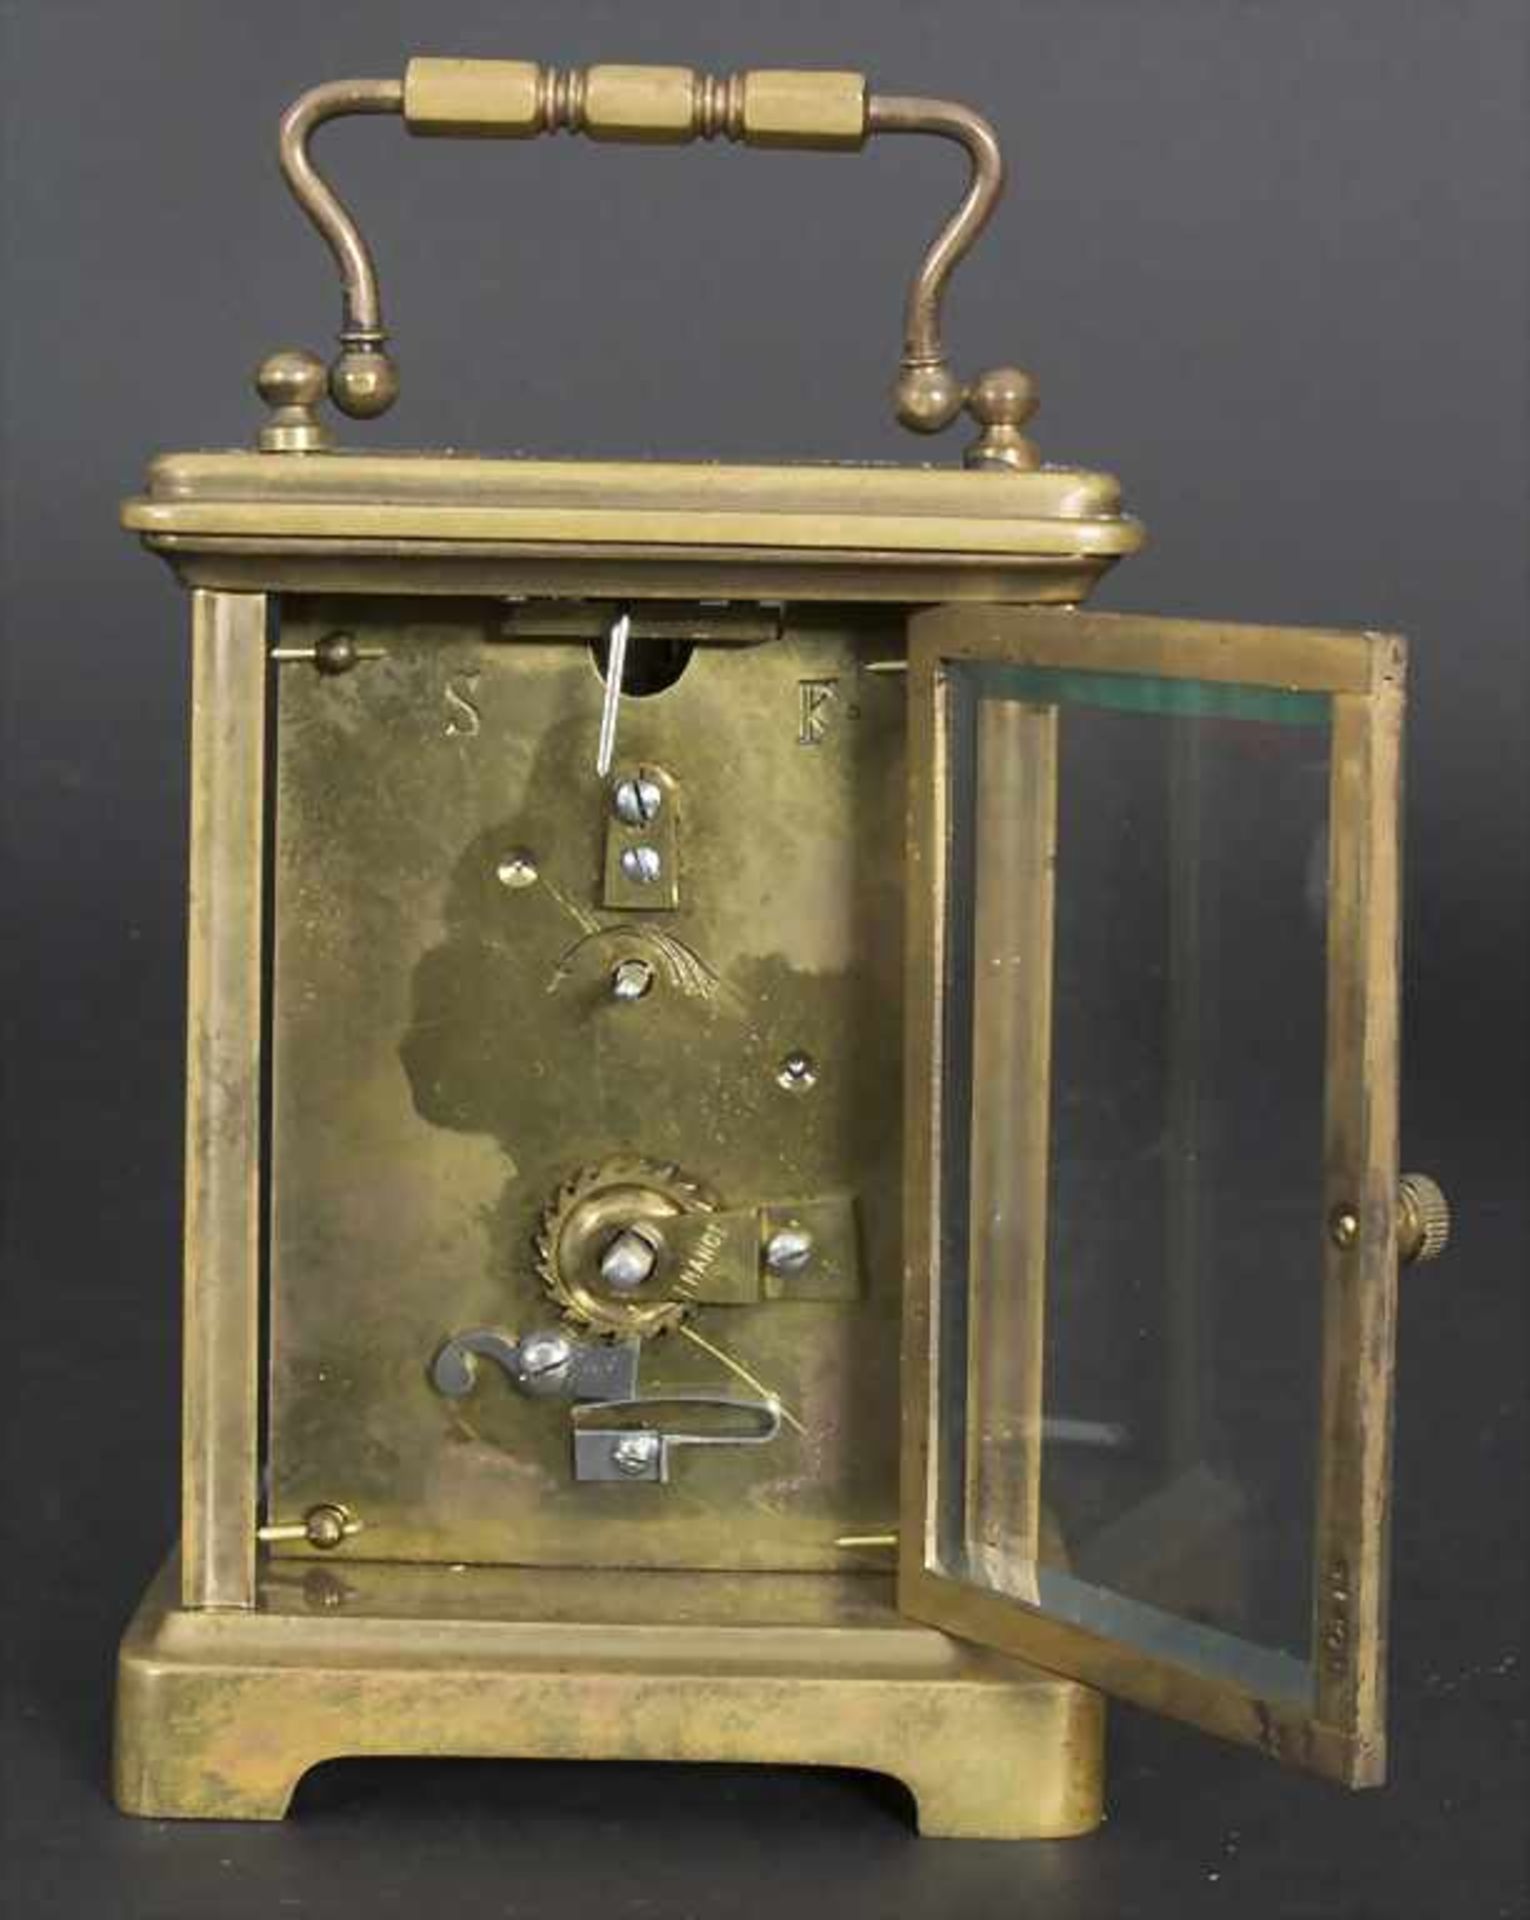 Reiseuhr / A travel clock, um 1900Material: Reiseuhr im Etui, mit Aufzug-Schlüssel,Gehäuse: rundum - Image 4 of 7